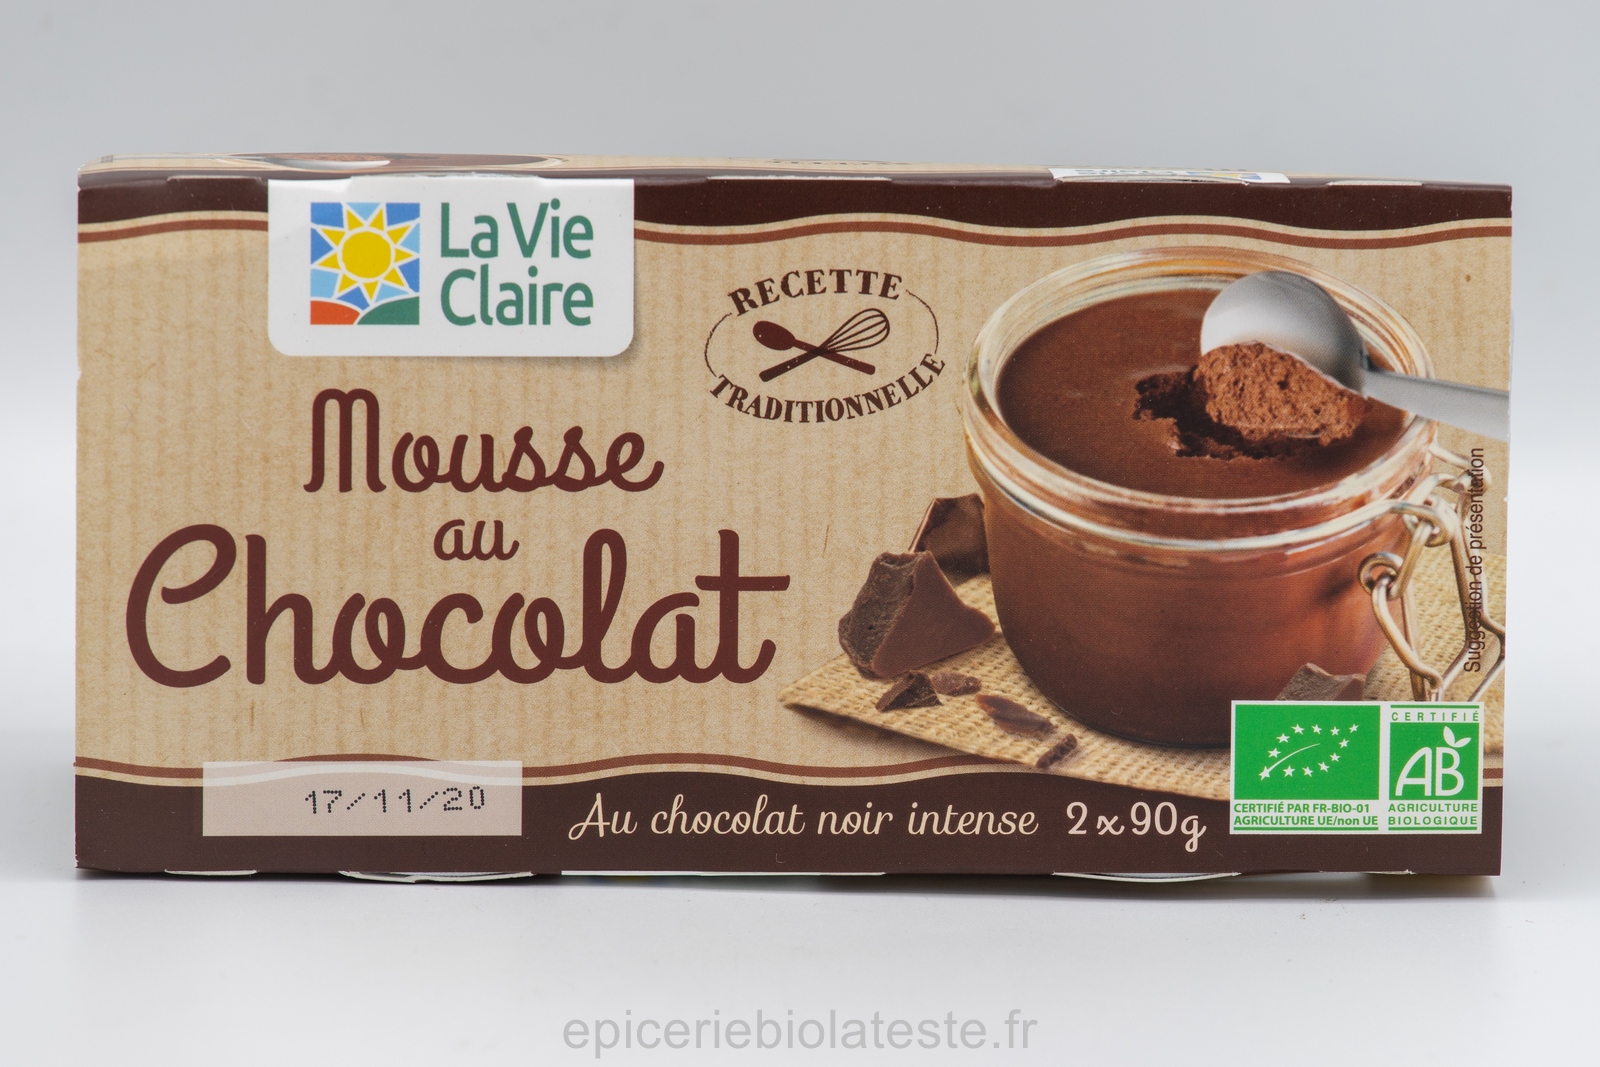 Mousse au chocolat Bio 100g